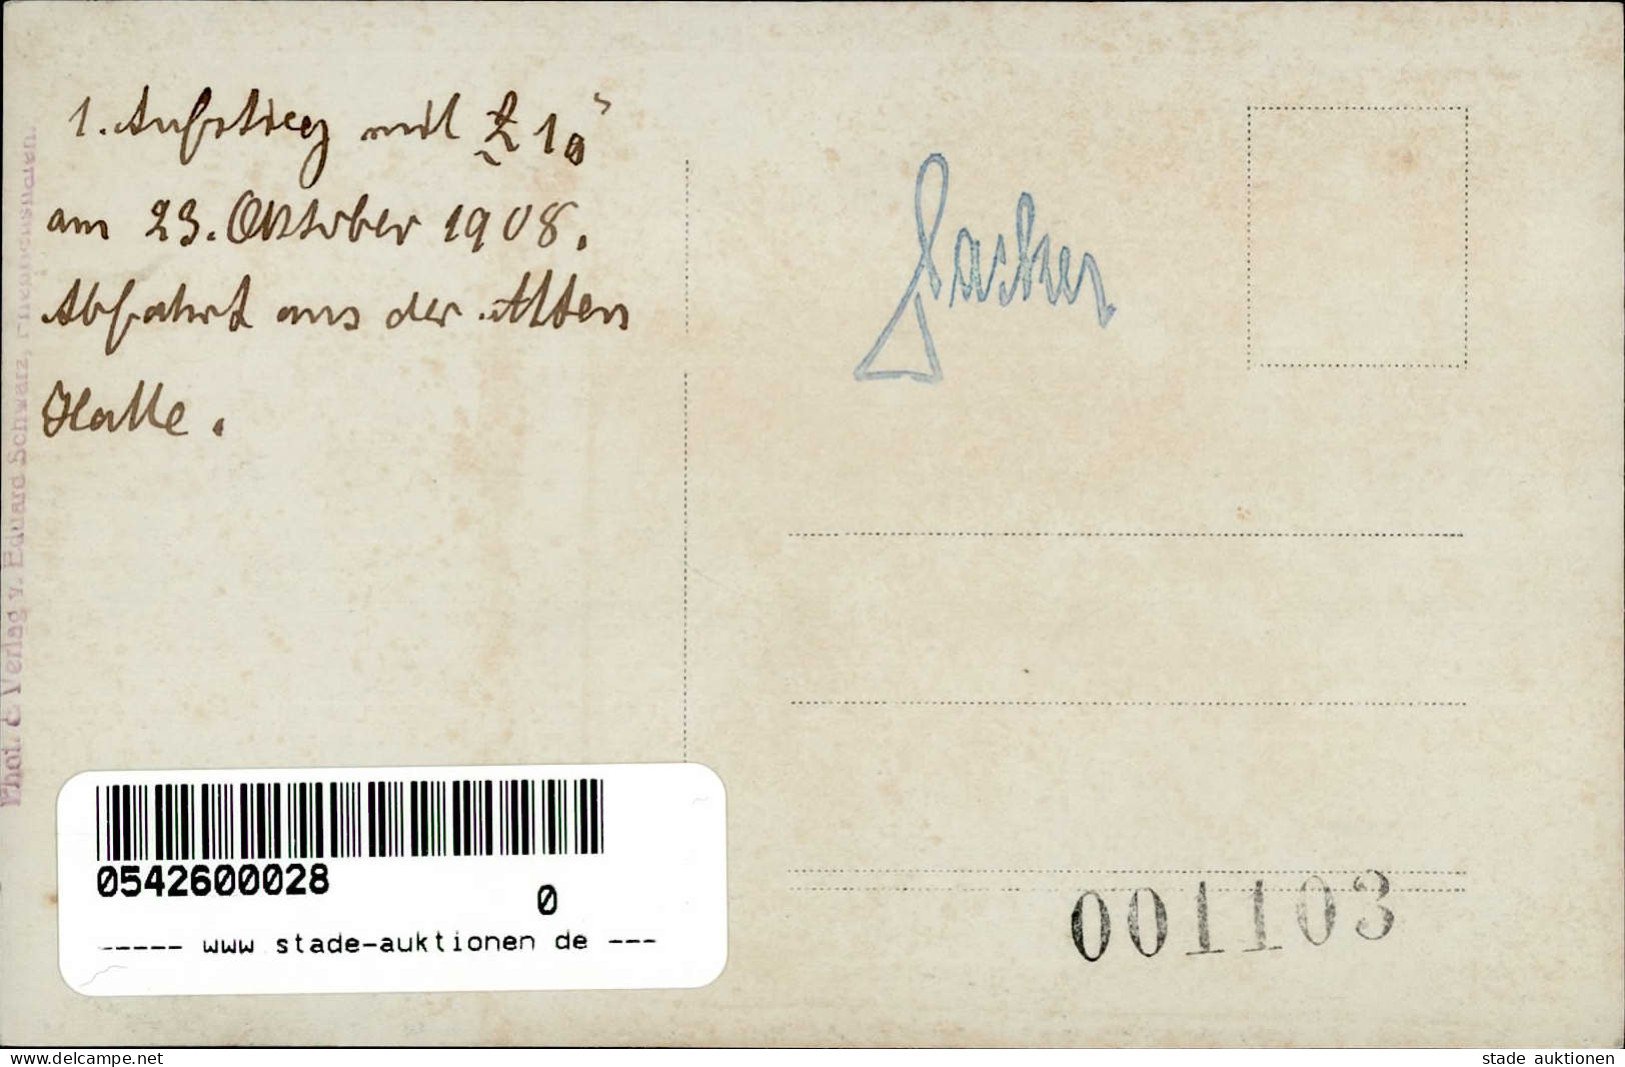 Zeppelin Aufstieg Aus Der Alten Halle 1908 Rückseite Gestpl. Hacker (Luftschiffkapitän) Foto-AK I-II Dirigeable - Dirigeables